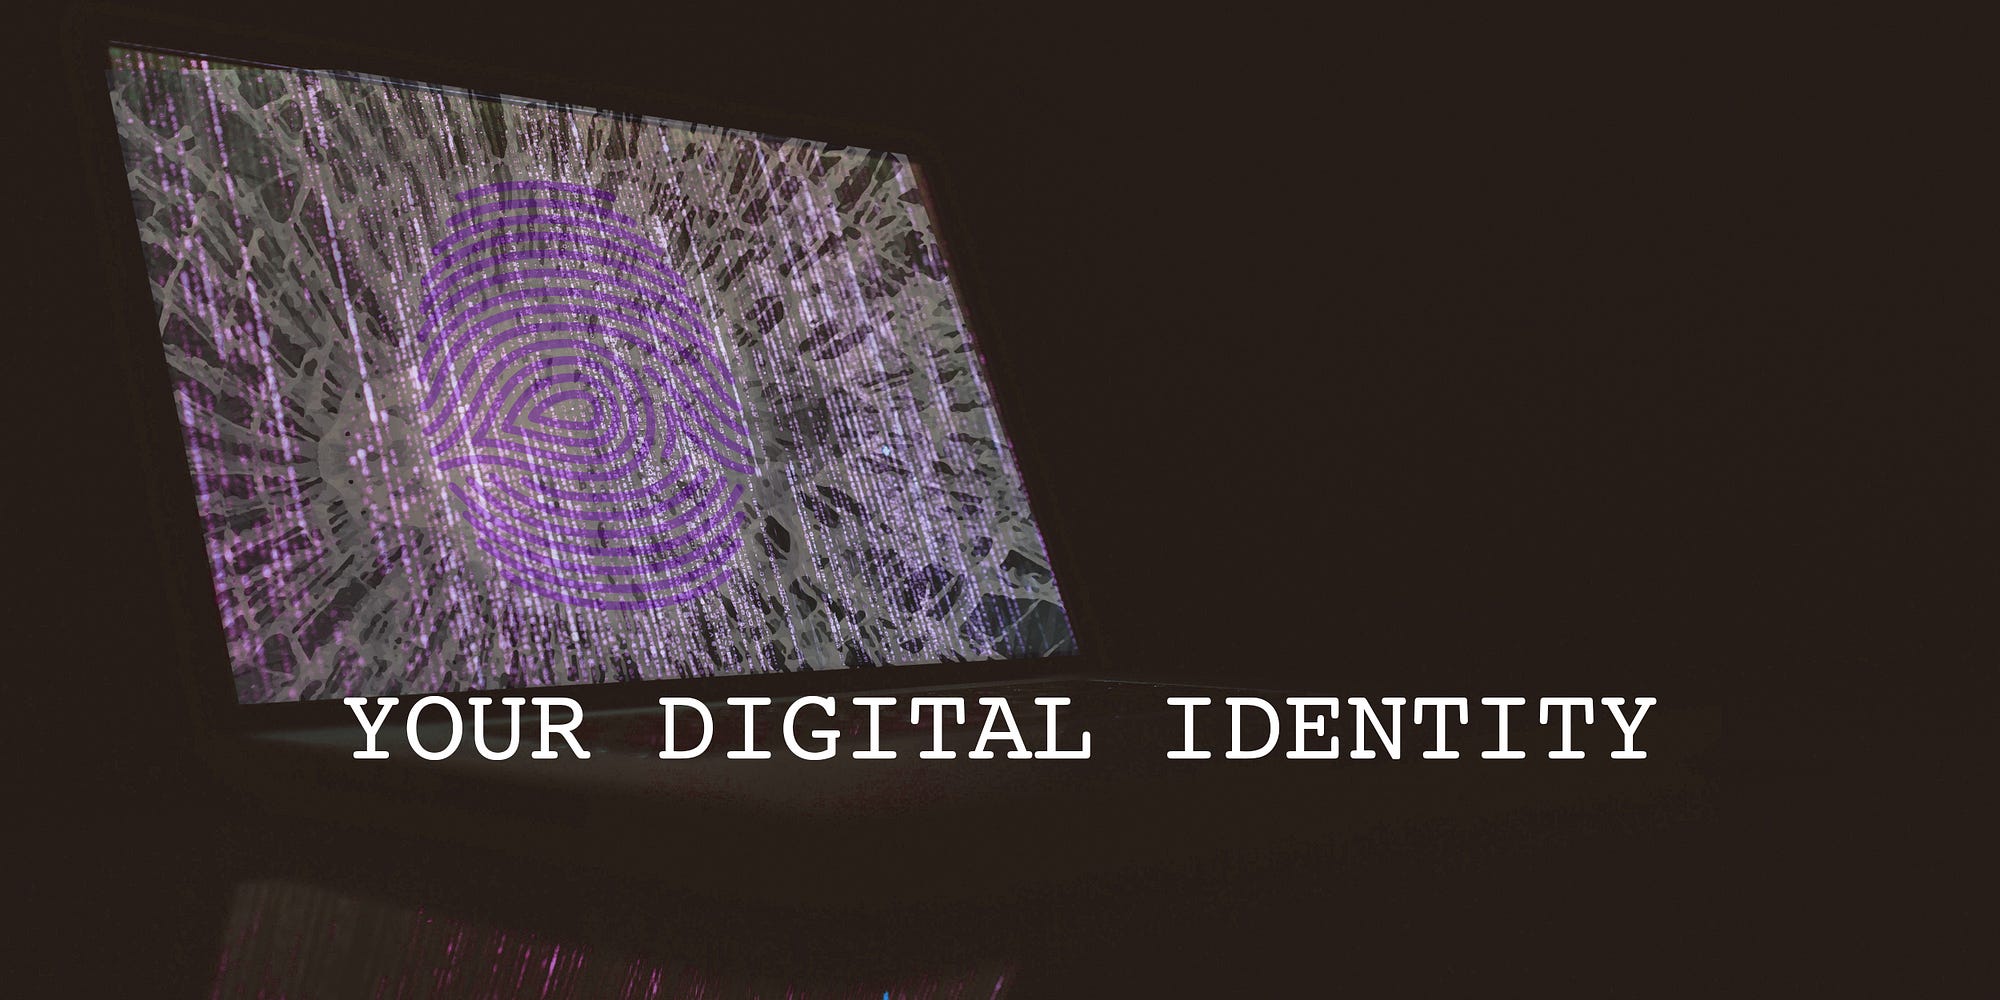 Resultado de imagen de Cybersecurity study of the dark web exposes vulnerability to machine identities